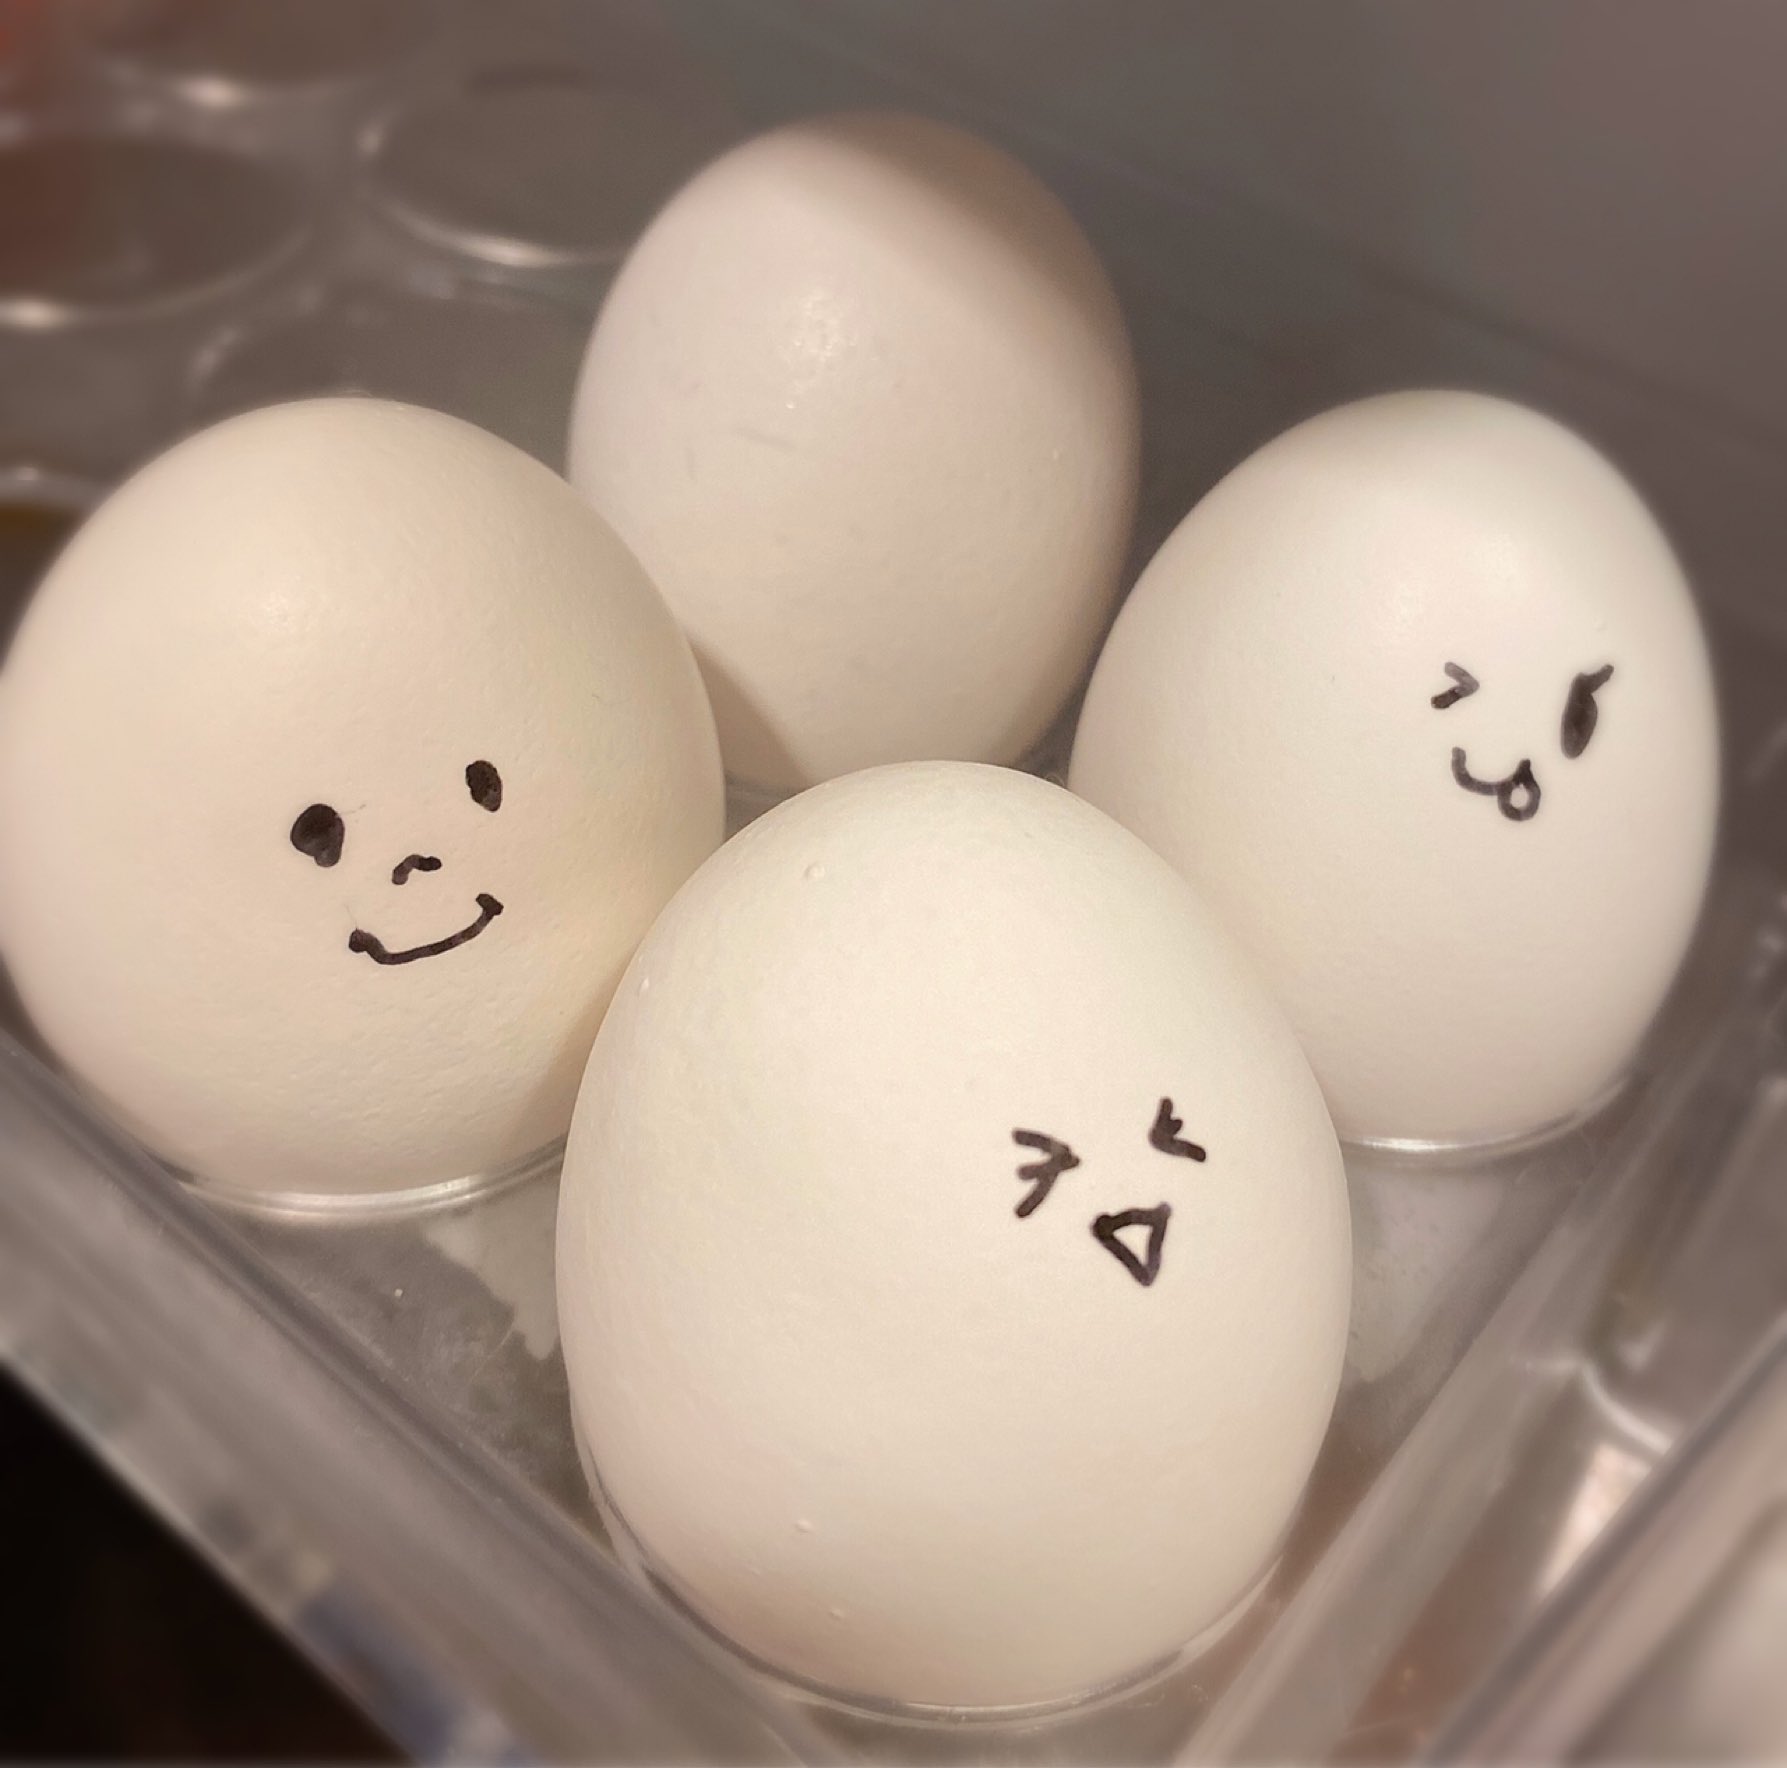 تويتر 寺崎裕香 على تويتر ゆで卵と生卵分けるために 顔書いた なんか可愛い 食べられない 笑 T Co 1qjterwrr4